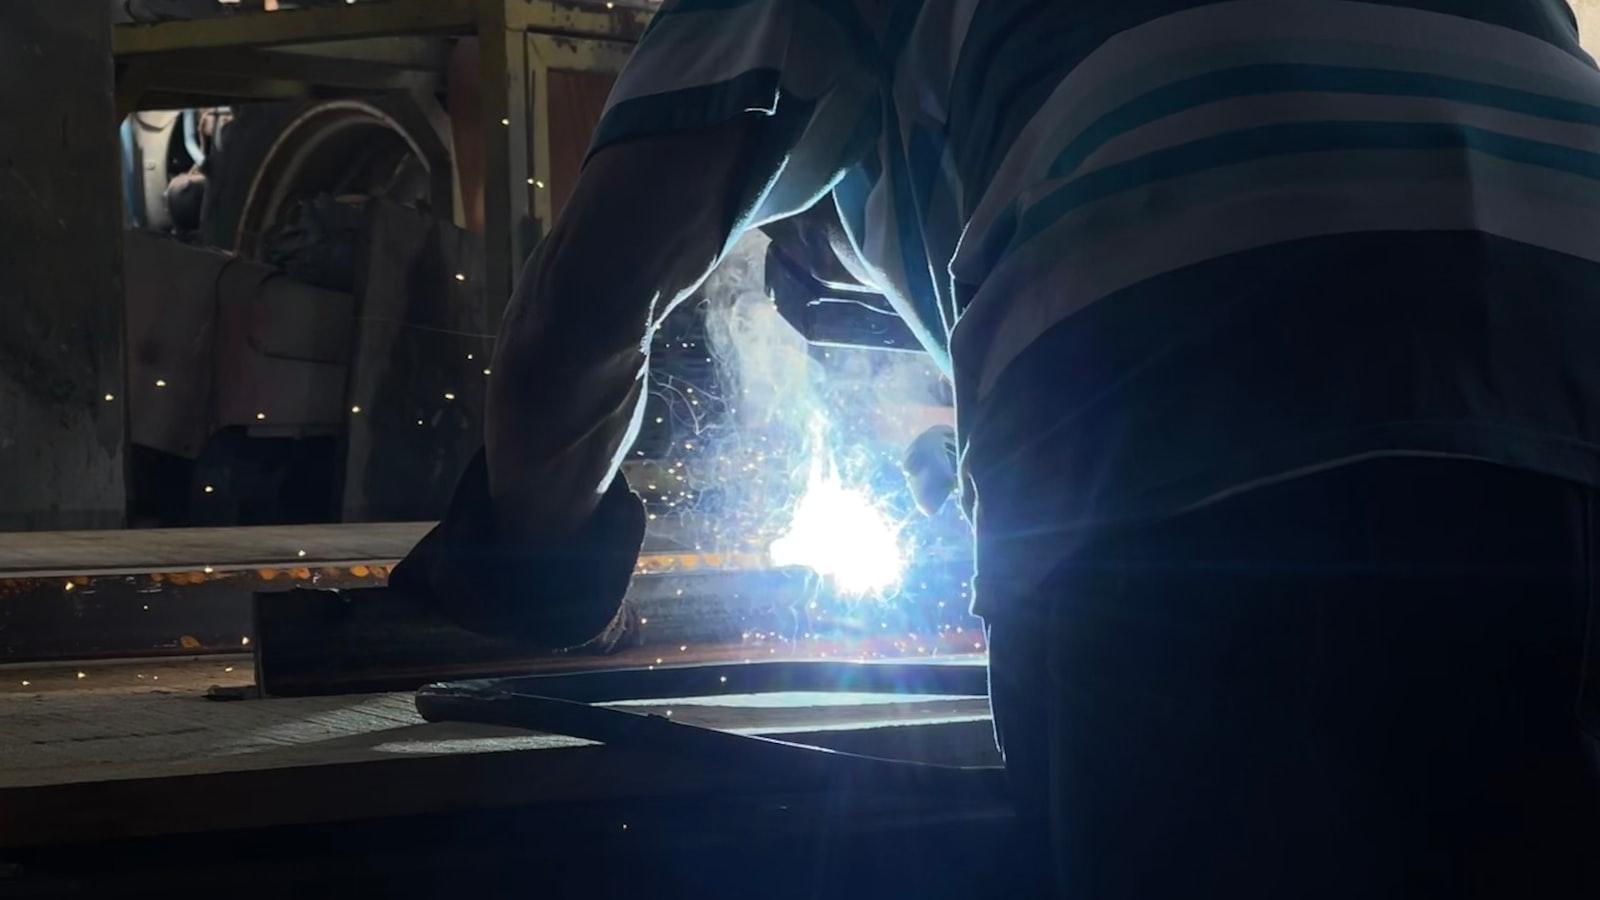 how much does a welder make?